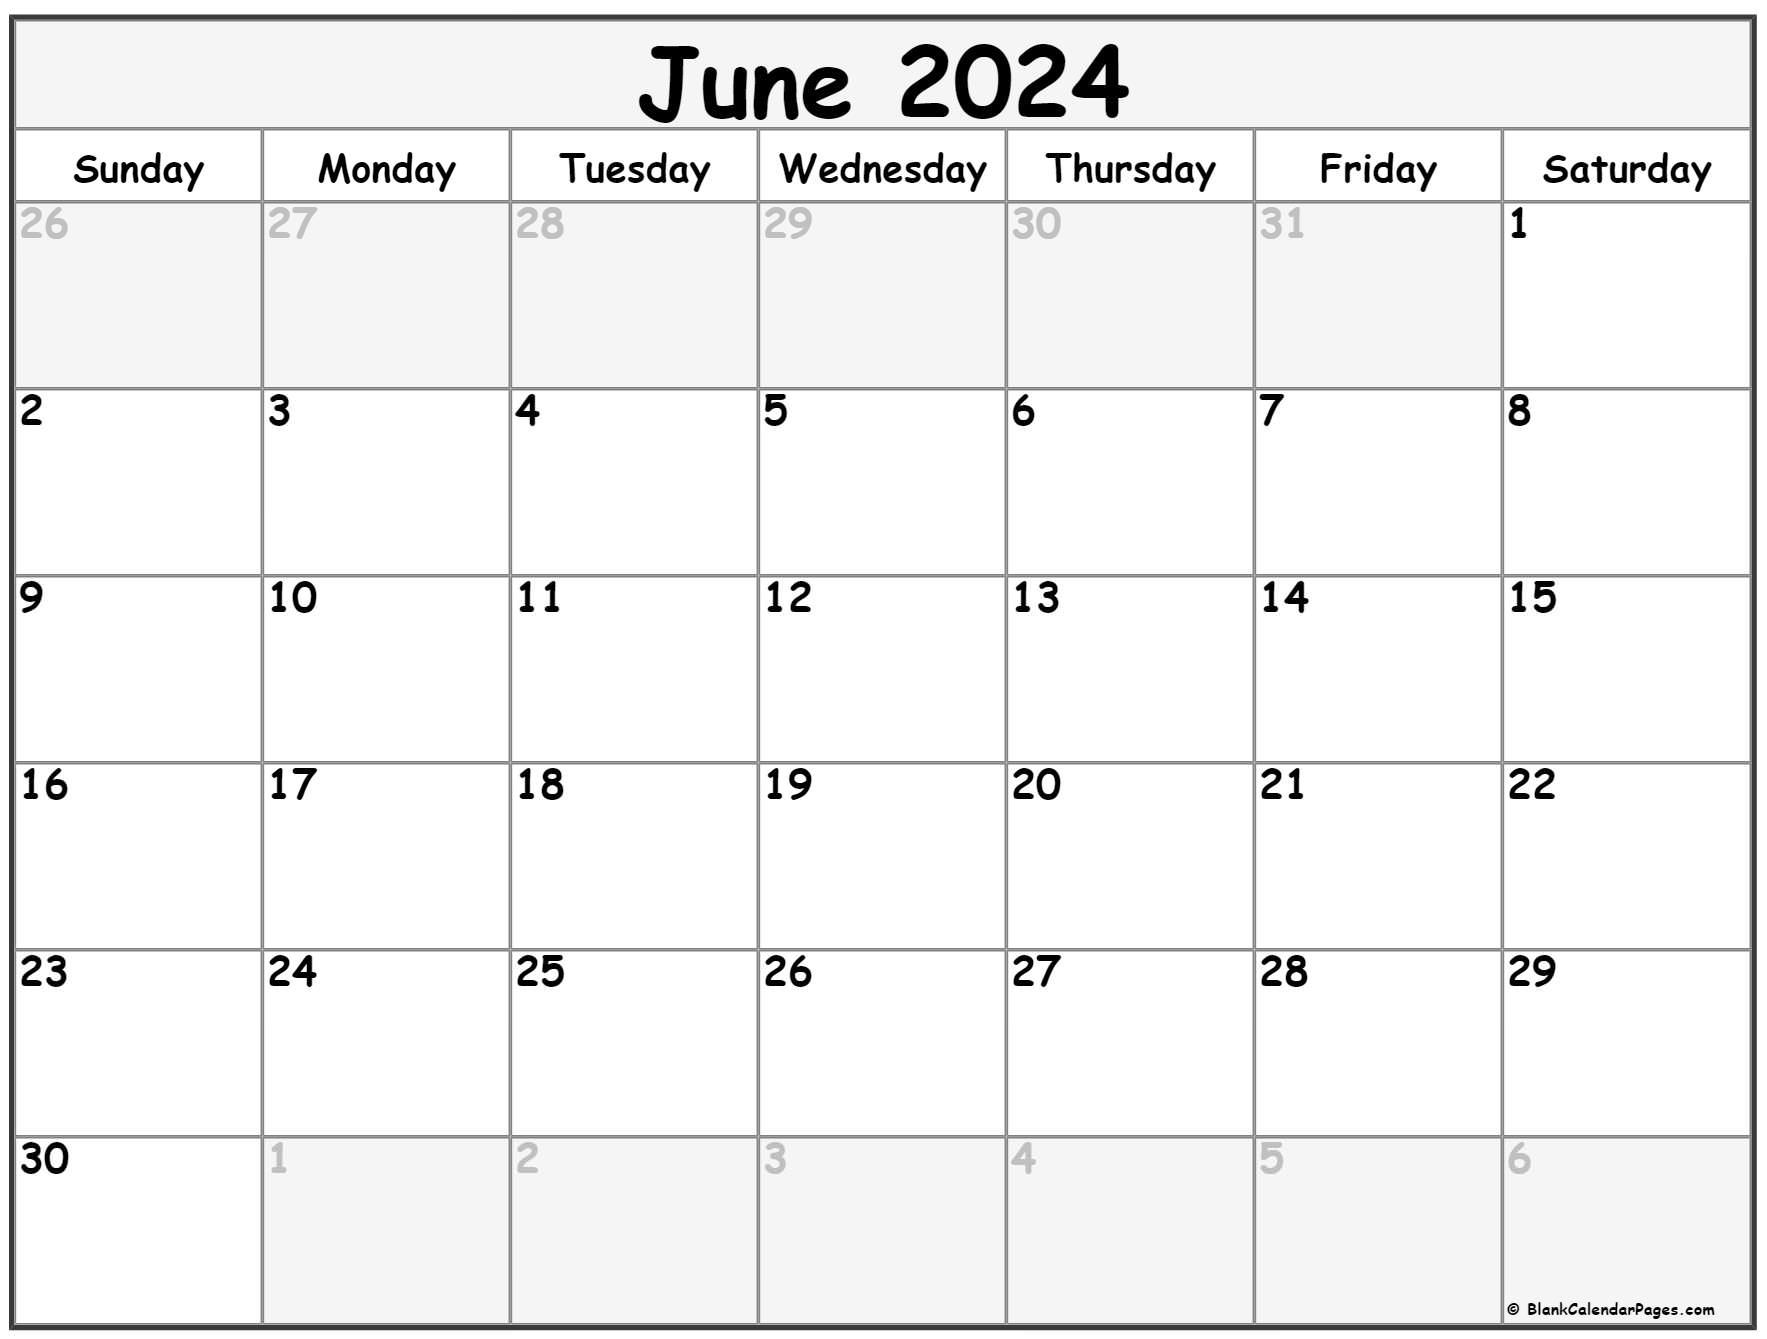 June 2024 Calendar | Free Printable Calendar for 2024 June Calendar Printable